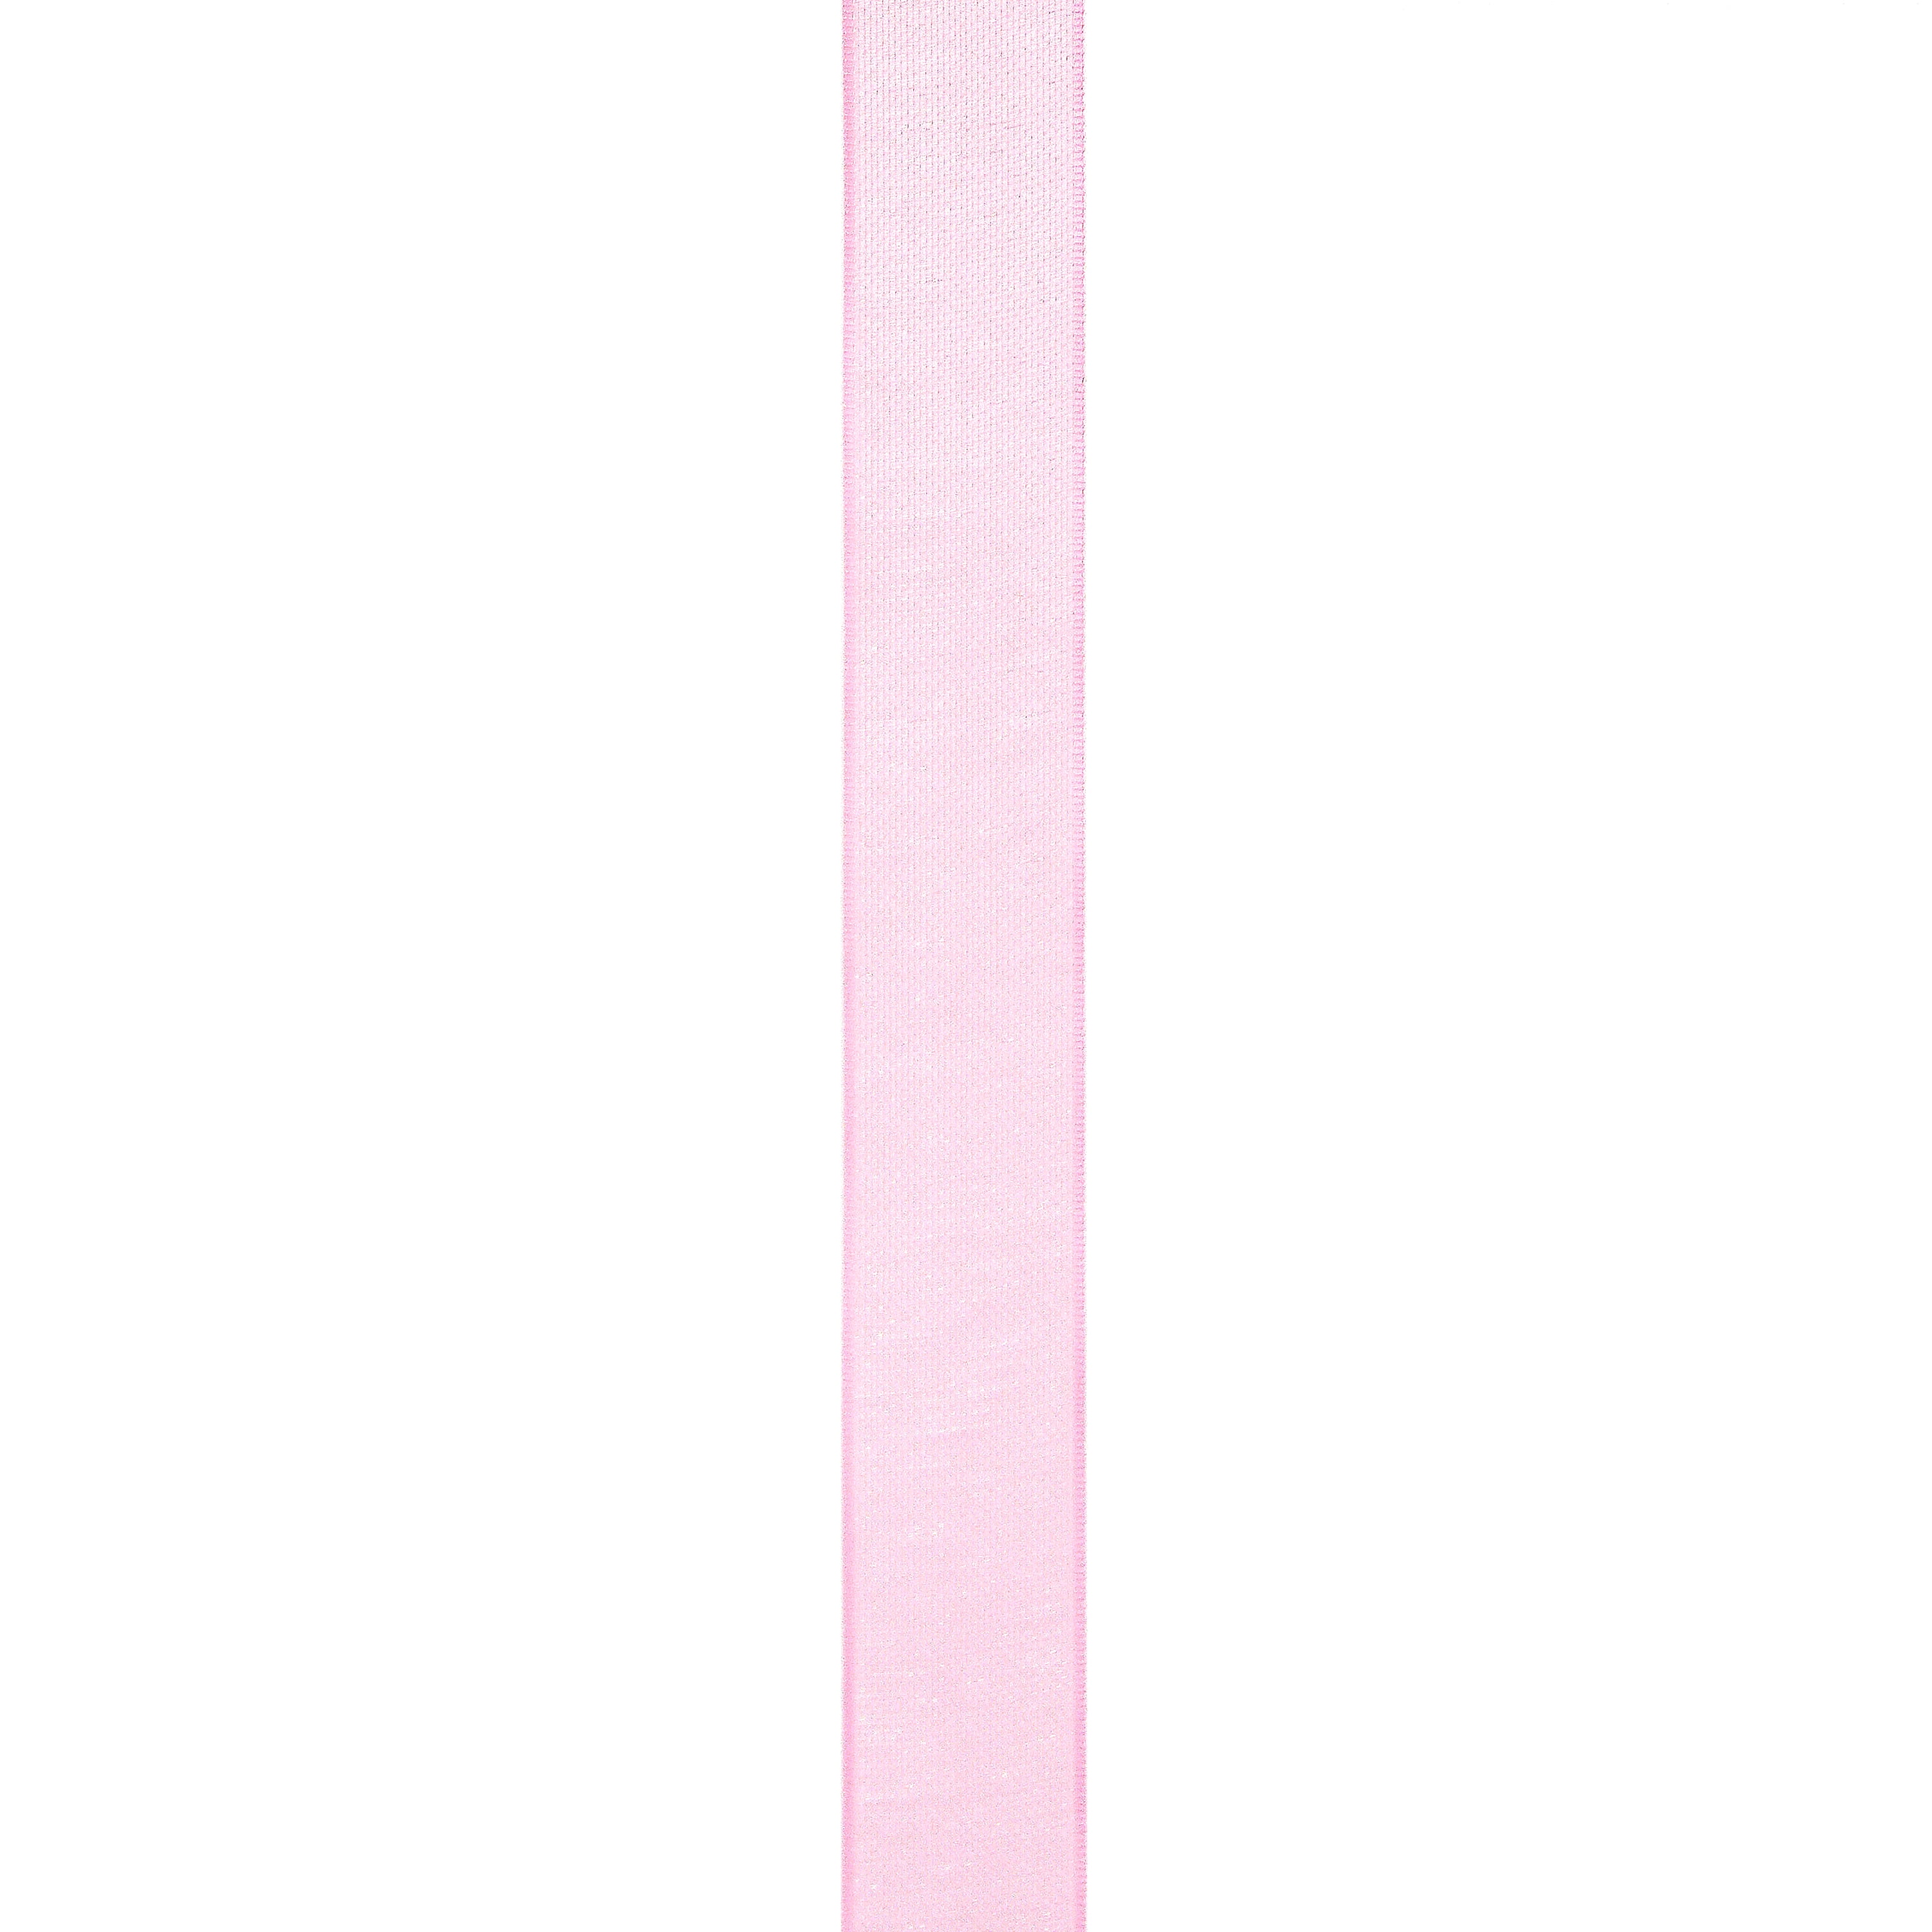 Organza Ribbon - 1 1/2 x 100 yds, Hot Pink - ULINE - S-13171HPINK